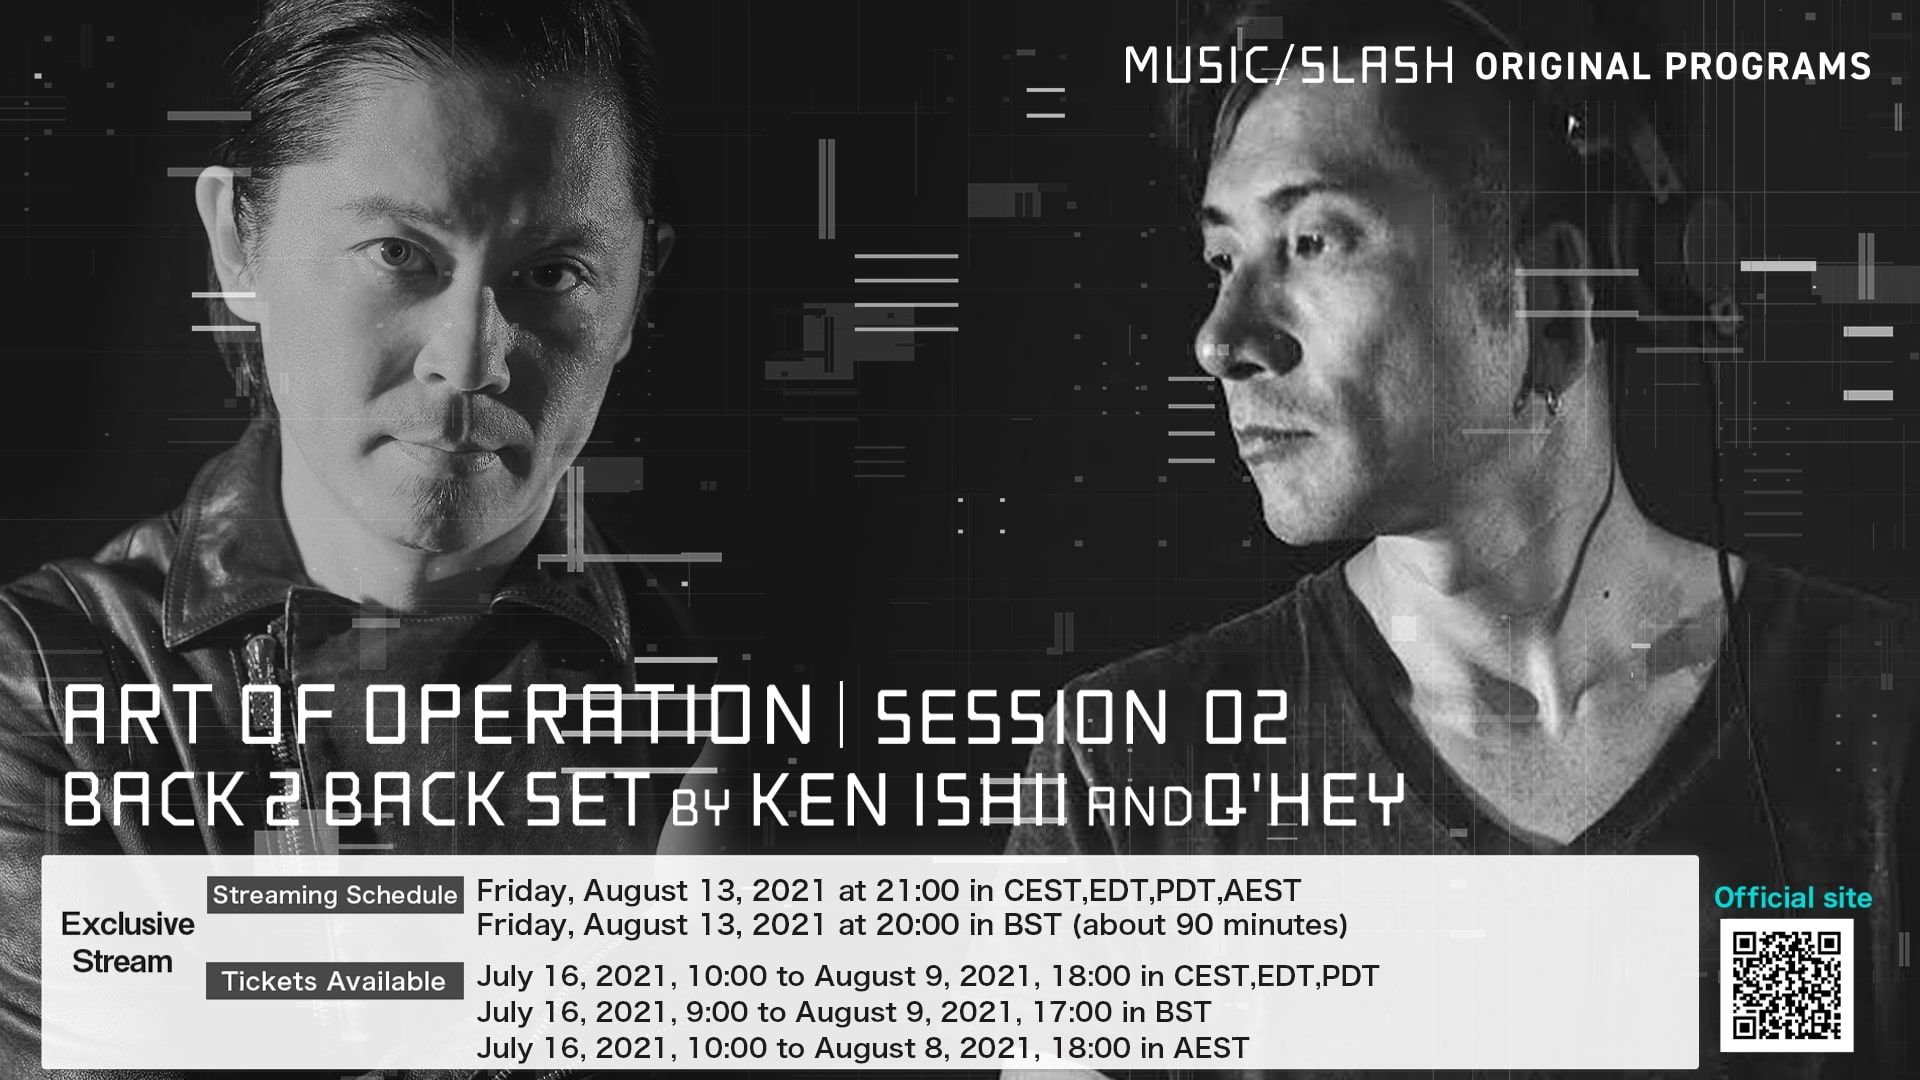 [MUSIC/SLASH] KEN ISHII / ART OF OPERATION | SESSION 02 BACK 2 BACK SET BY KEN ISHII AND Q'HEY